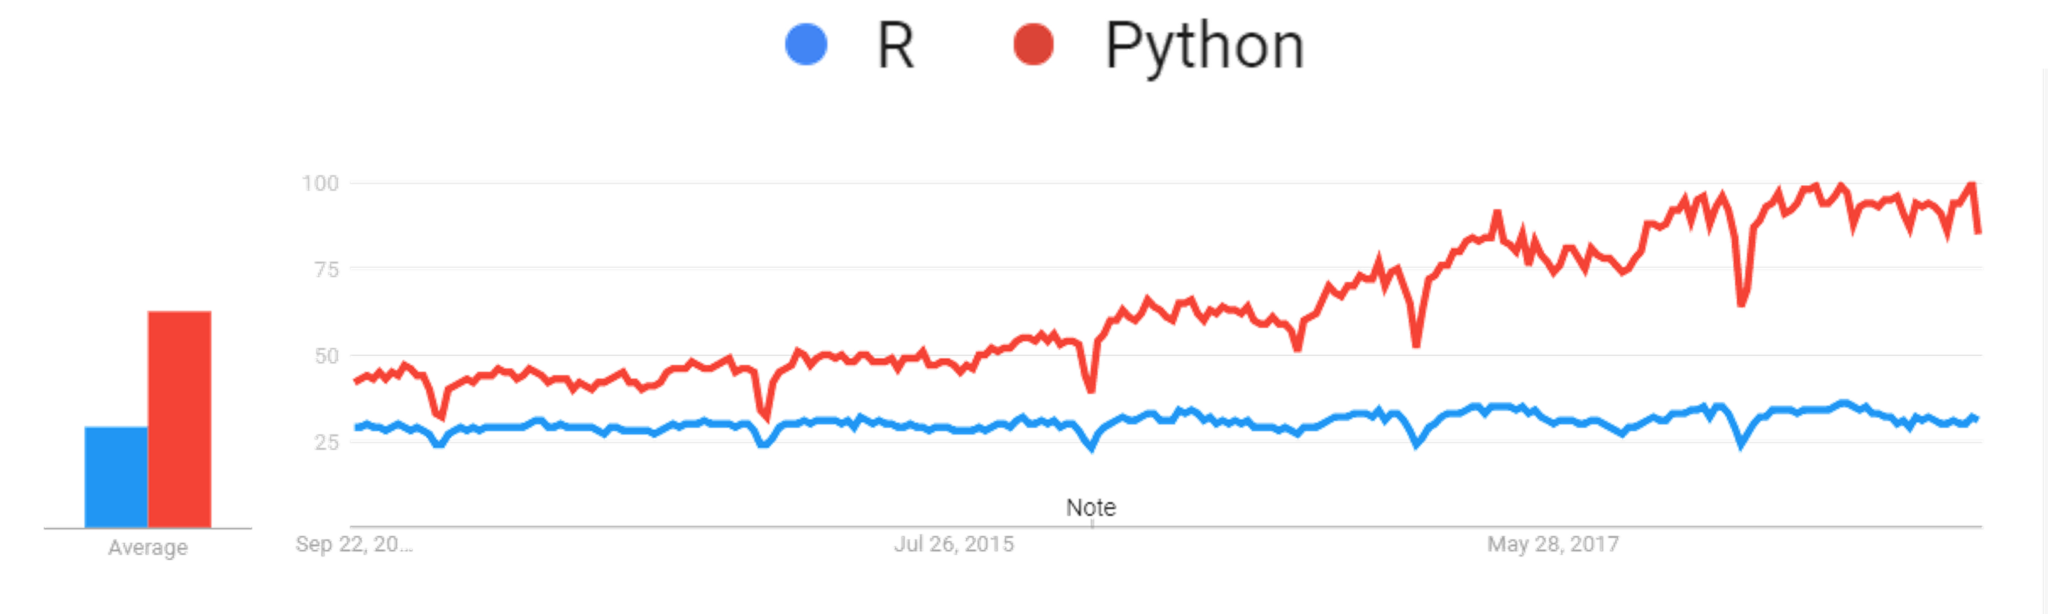 Popularity - R vs Python - Edureka